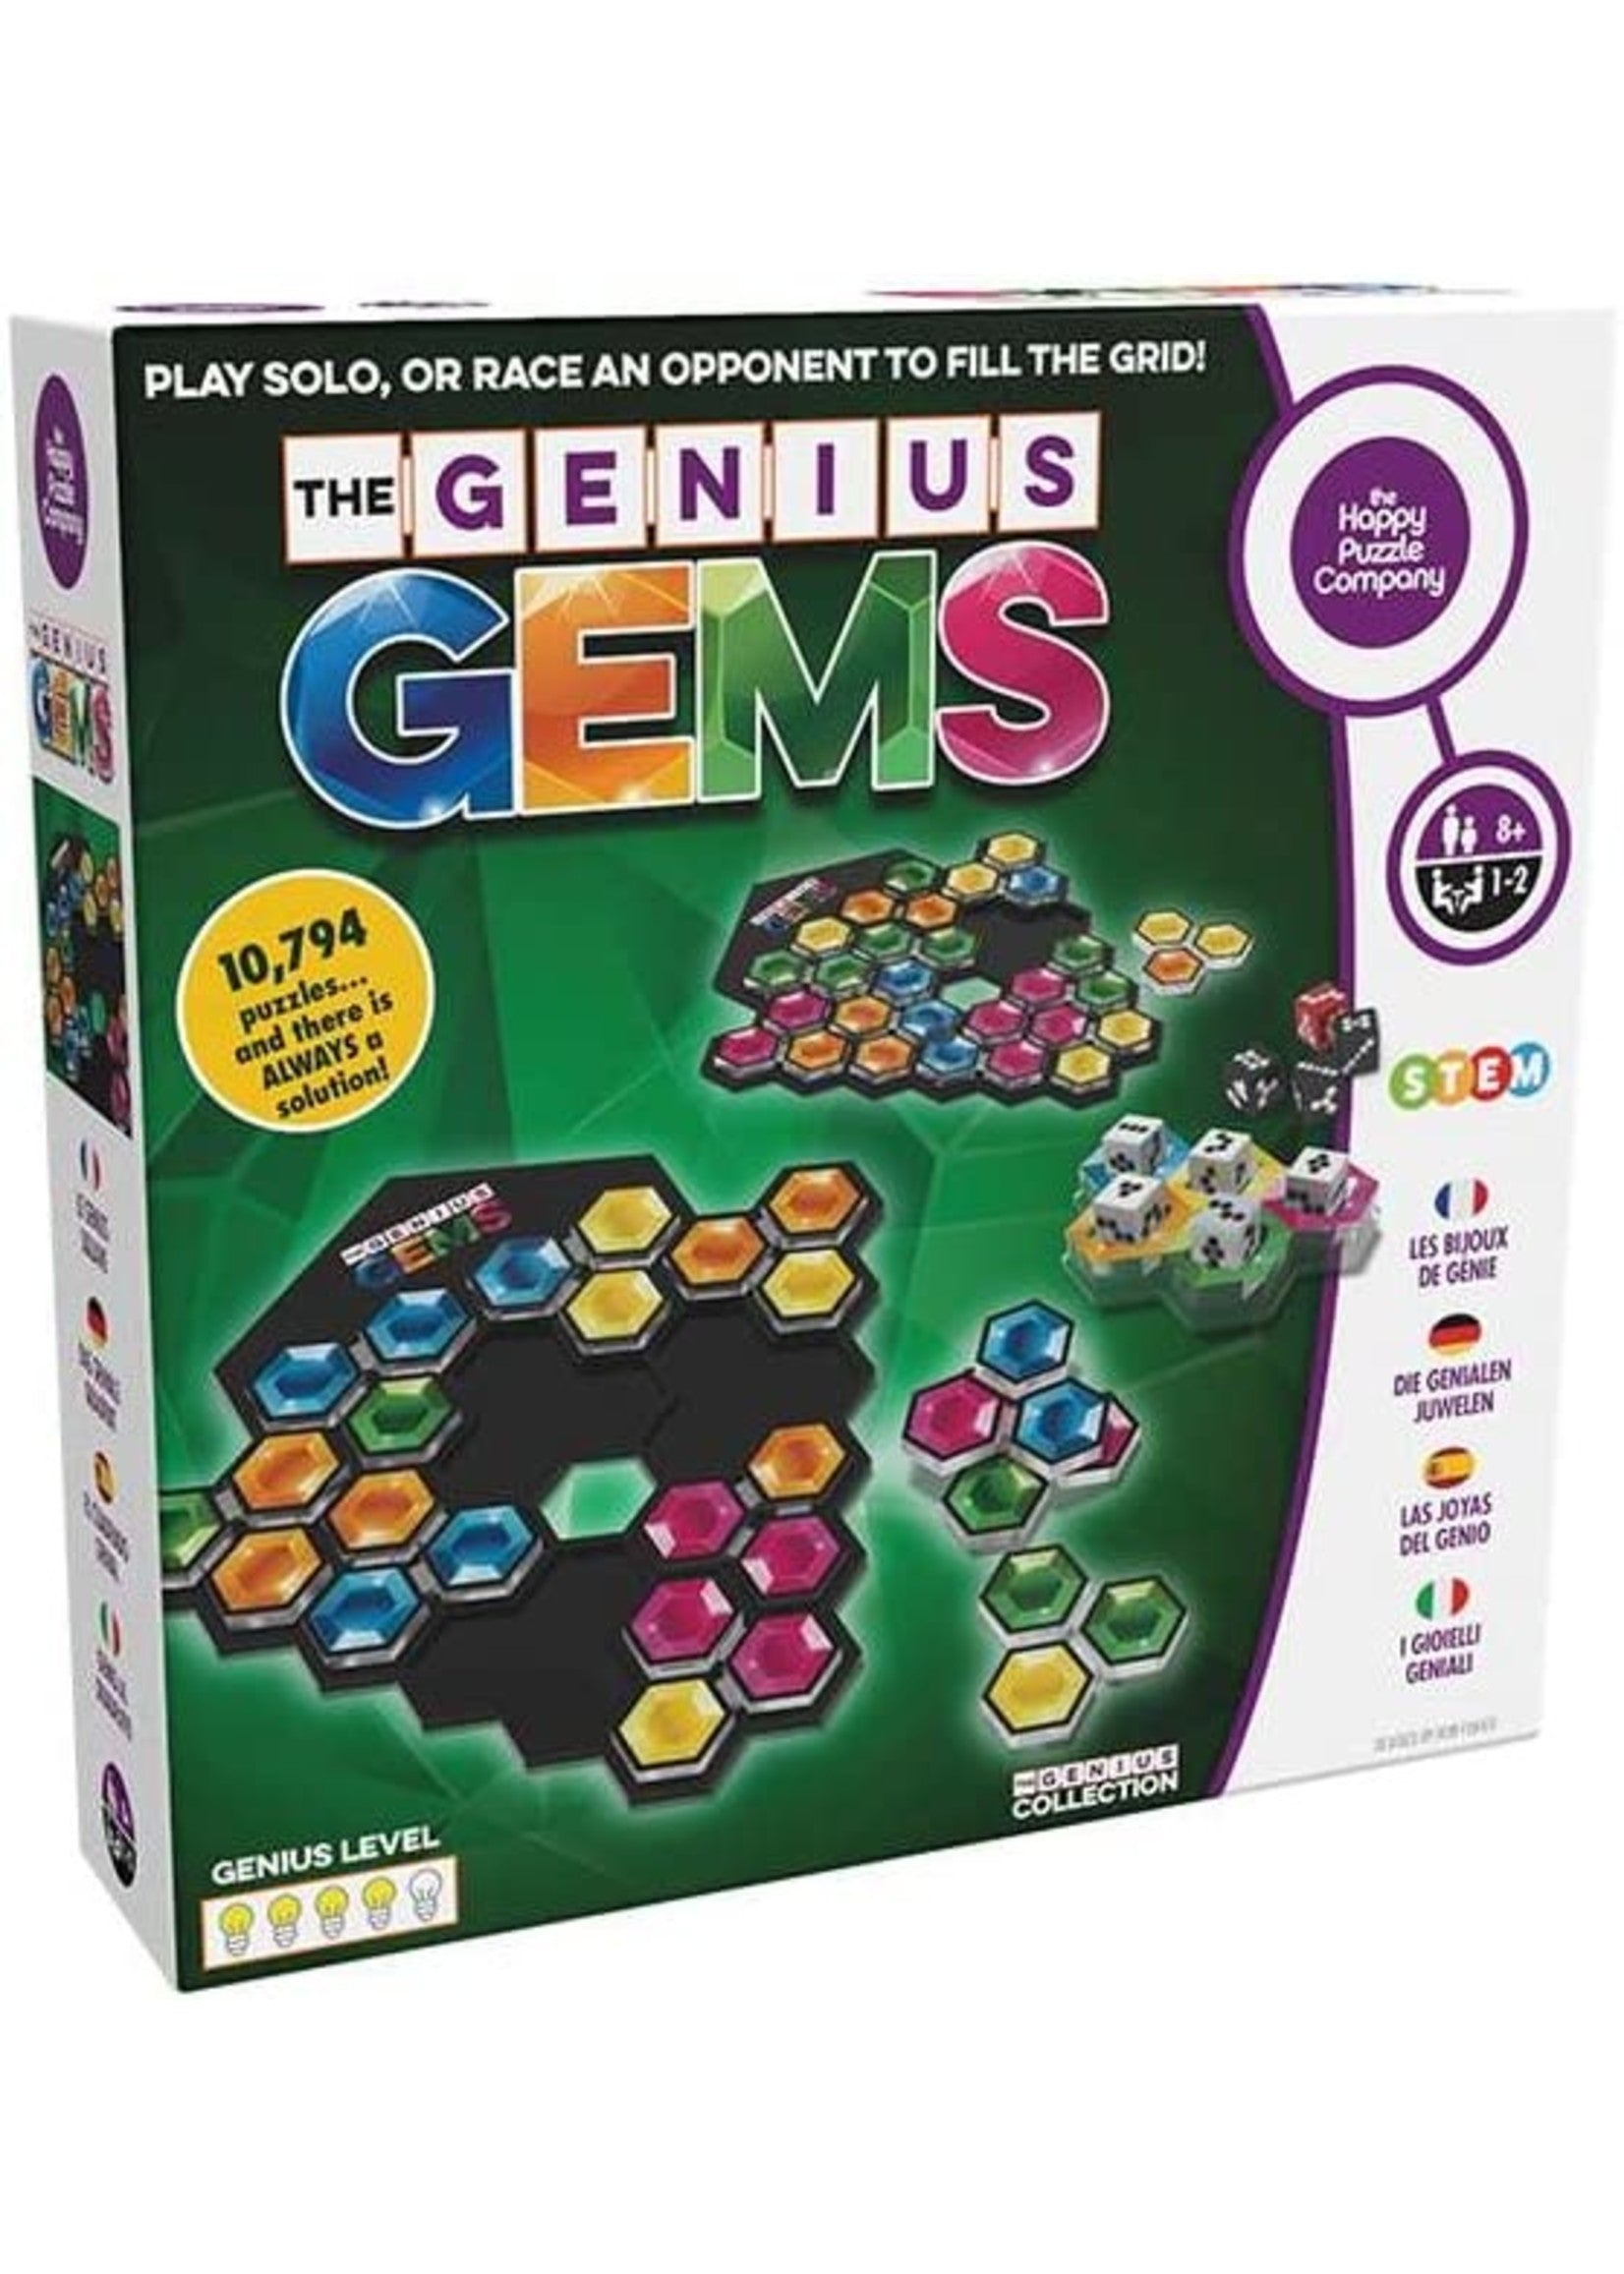 Genius Gems by Mukikim #HPCGGM